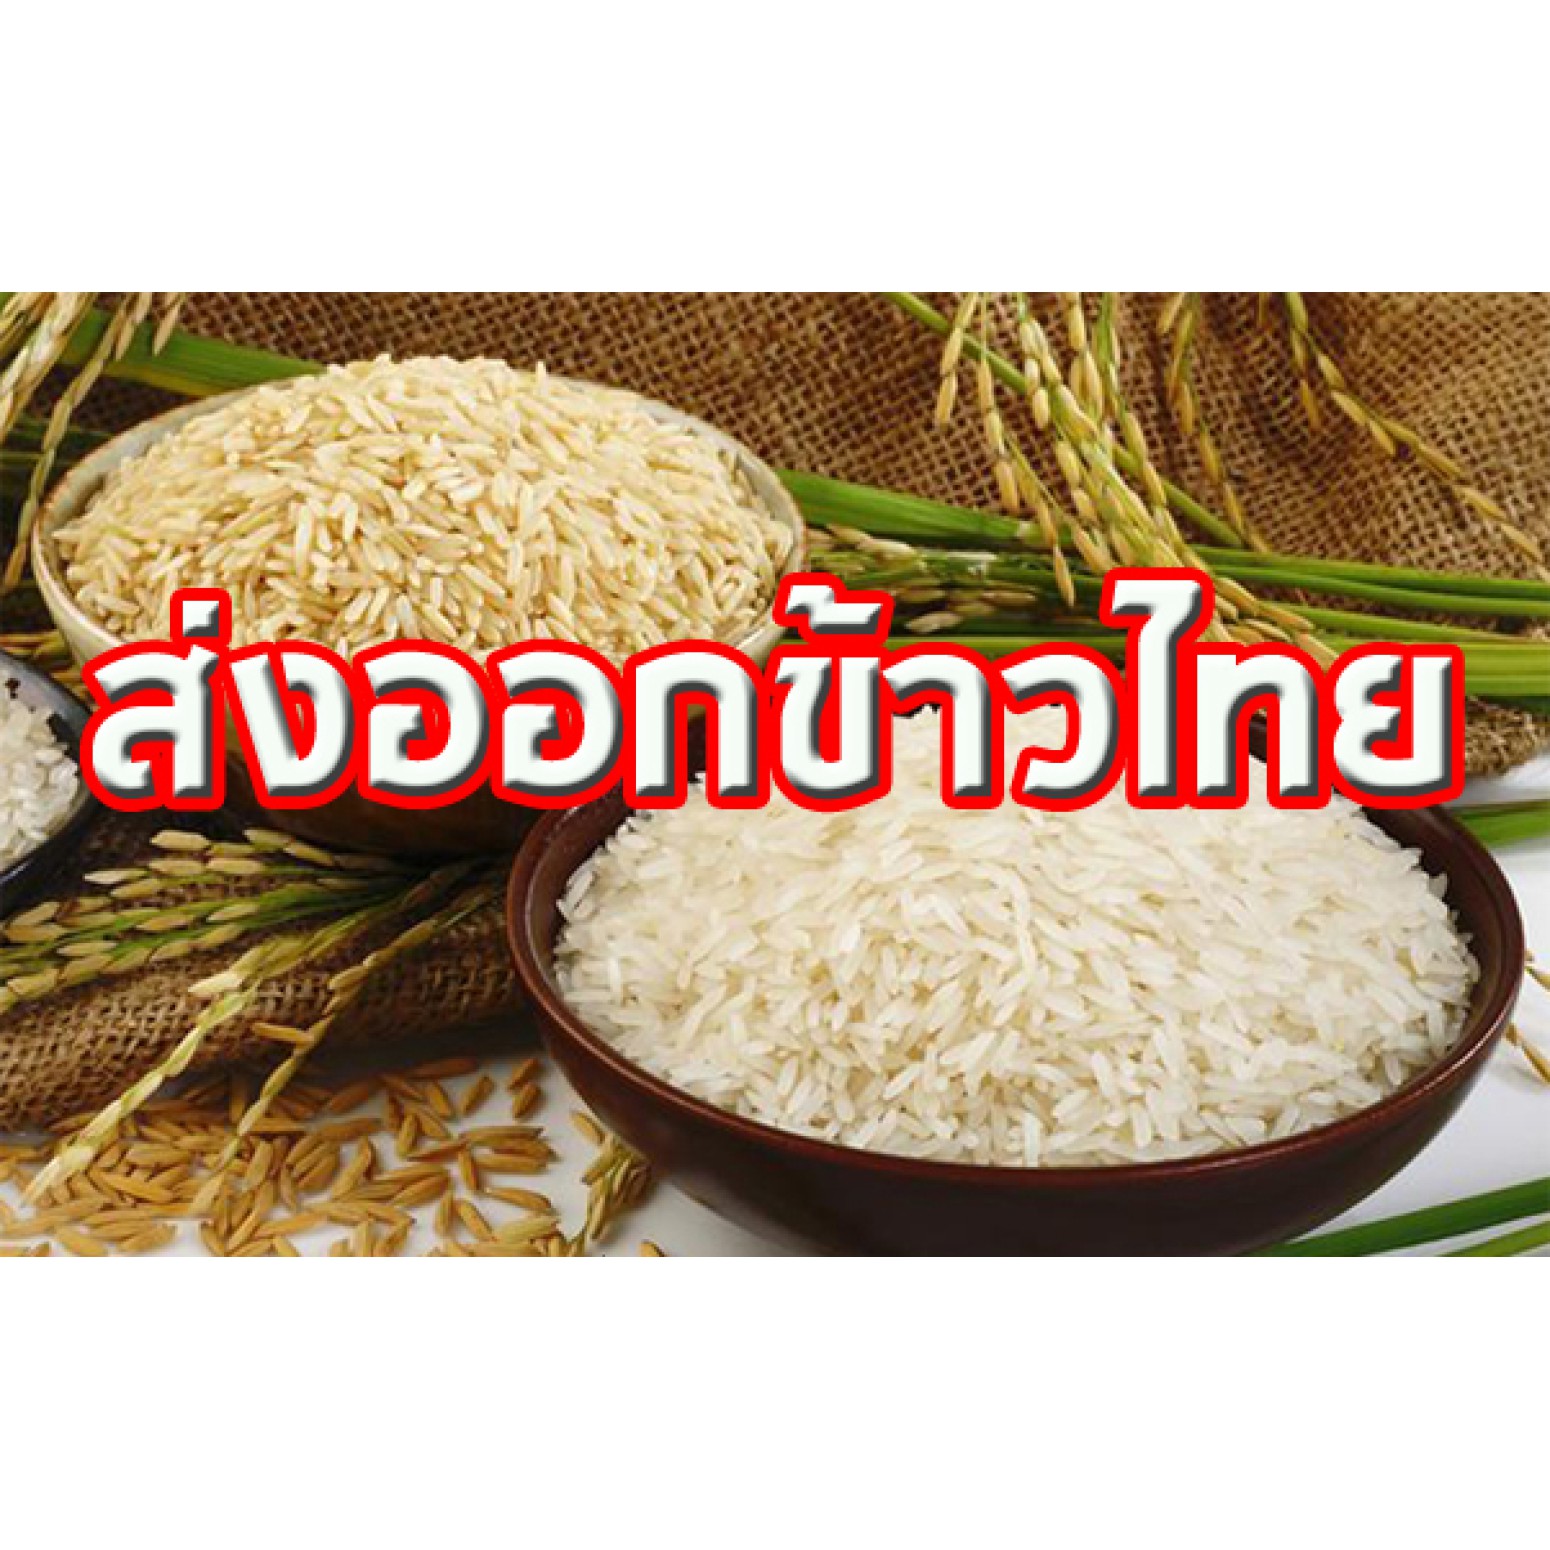 Thai rice exporter